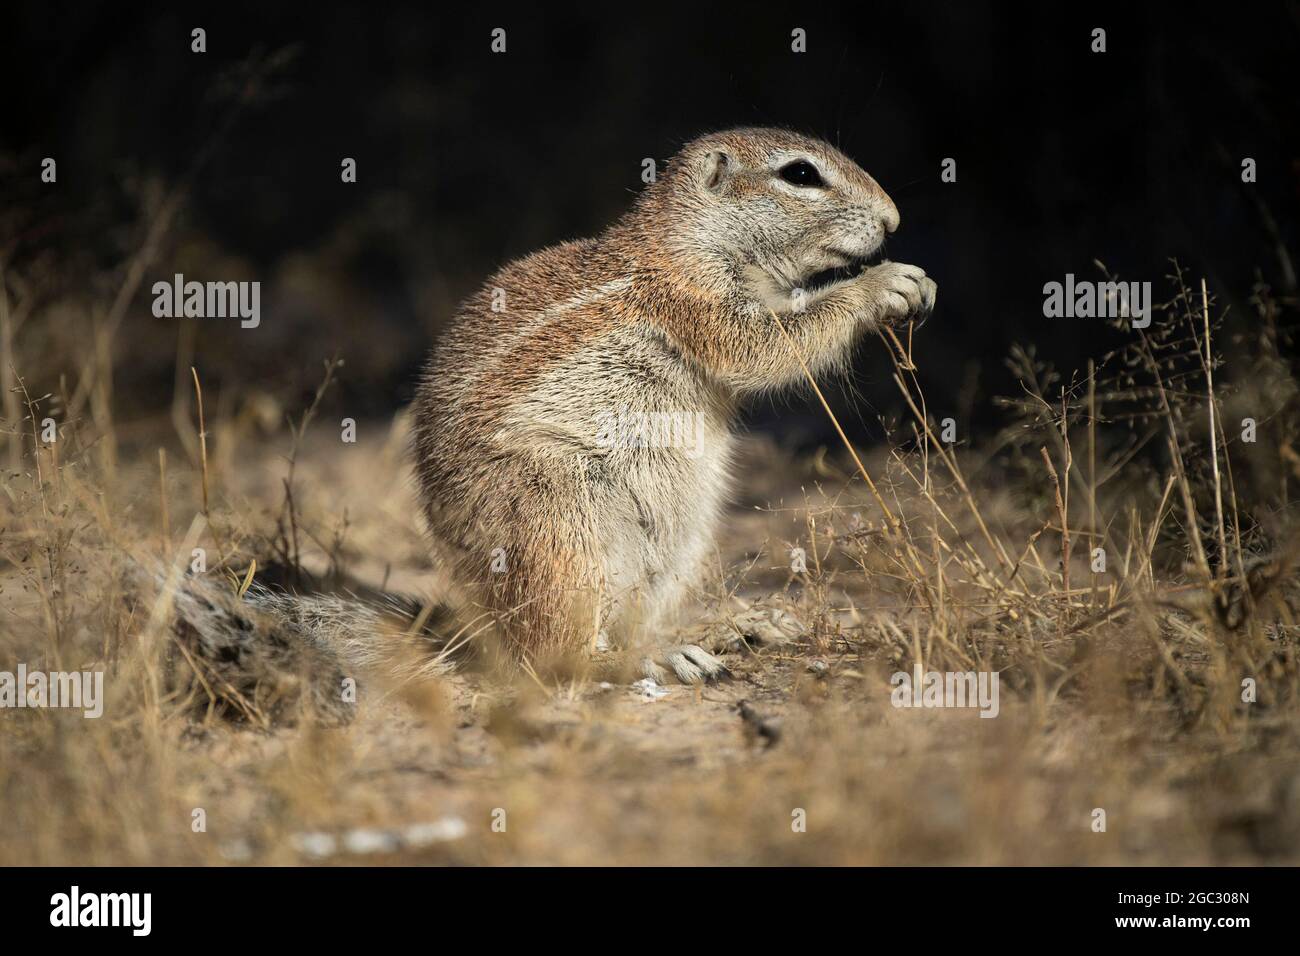 Ground squirrel, Xerus inauris, Kgalagadi Transfrontier Park, South Africa Stock Photo